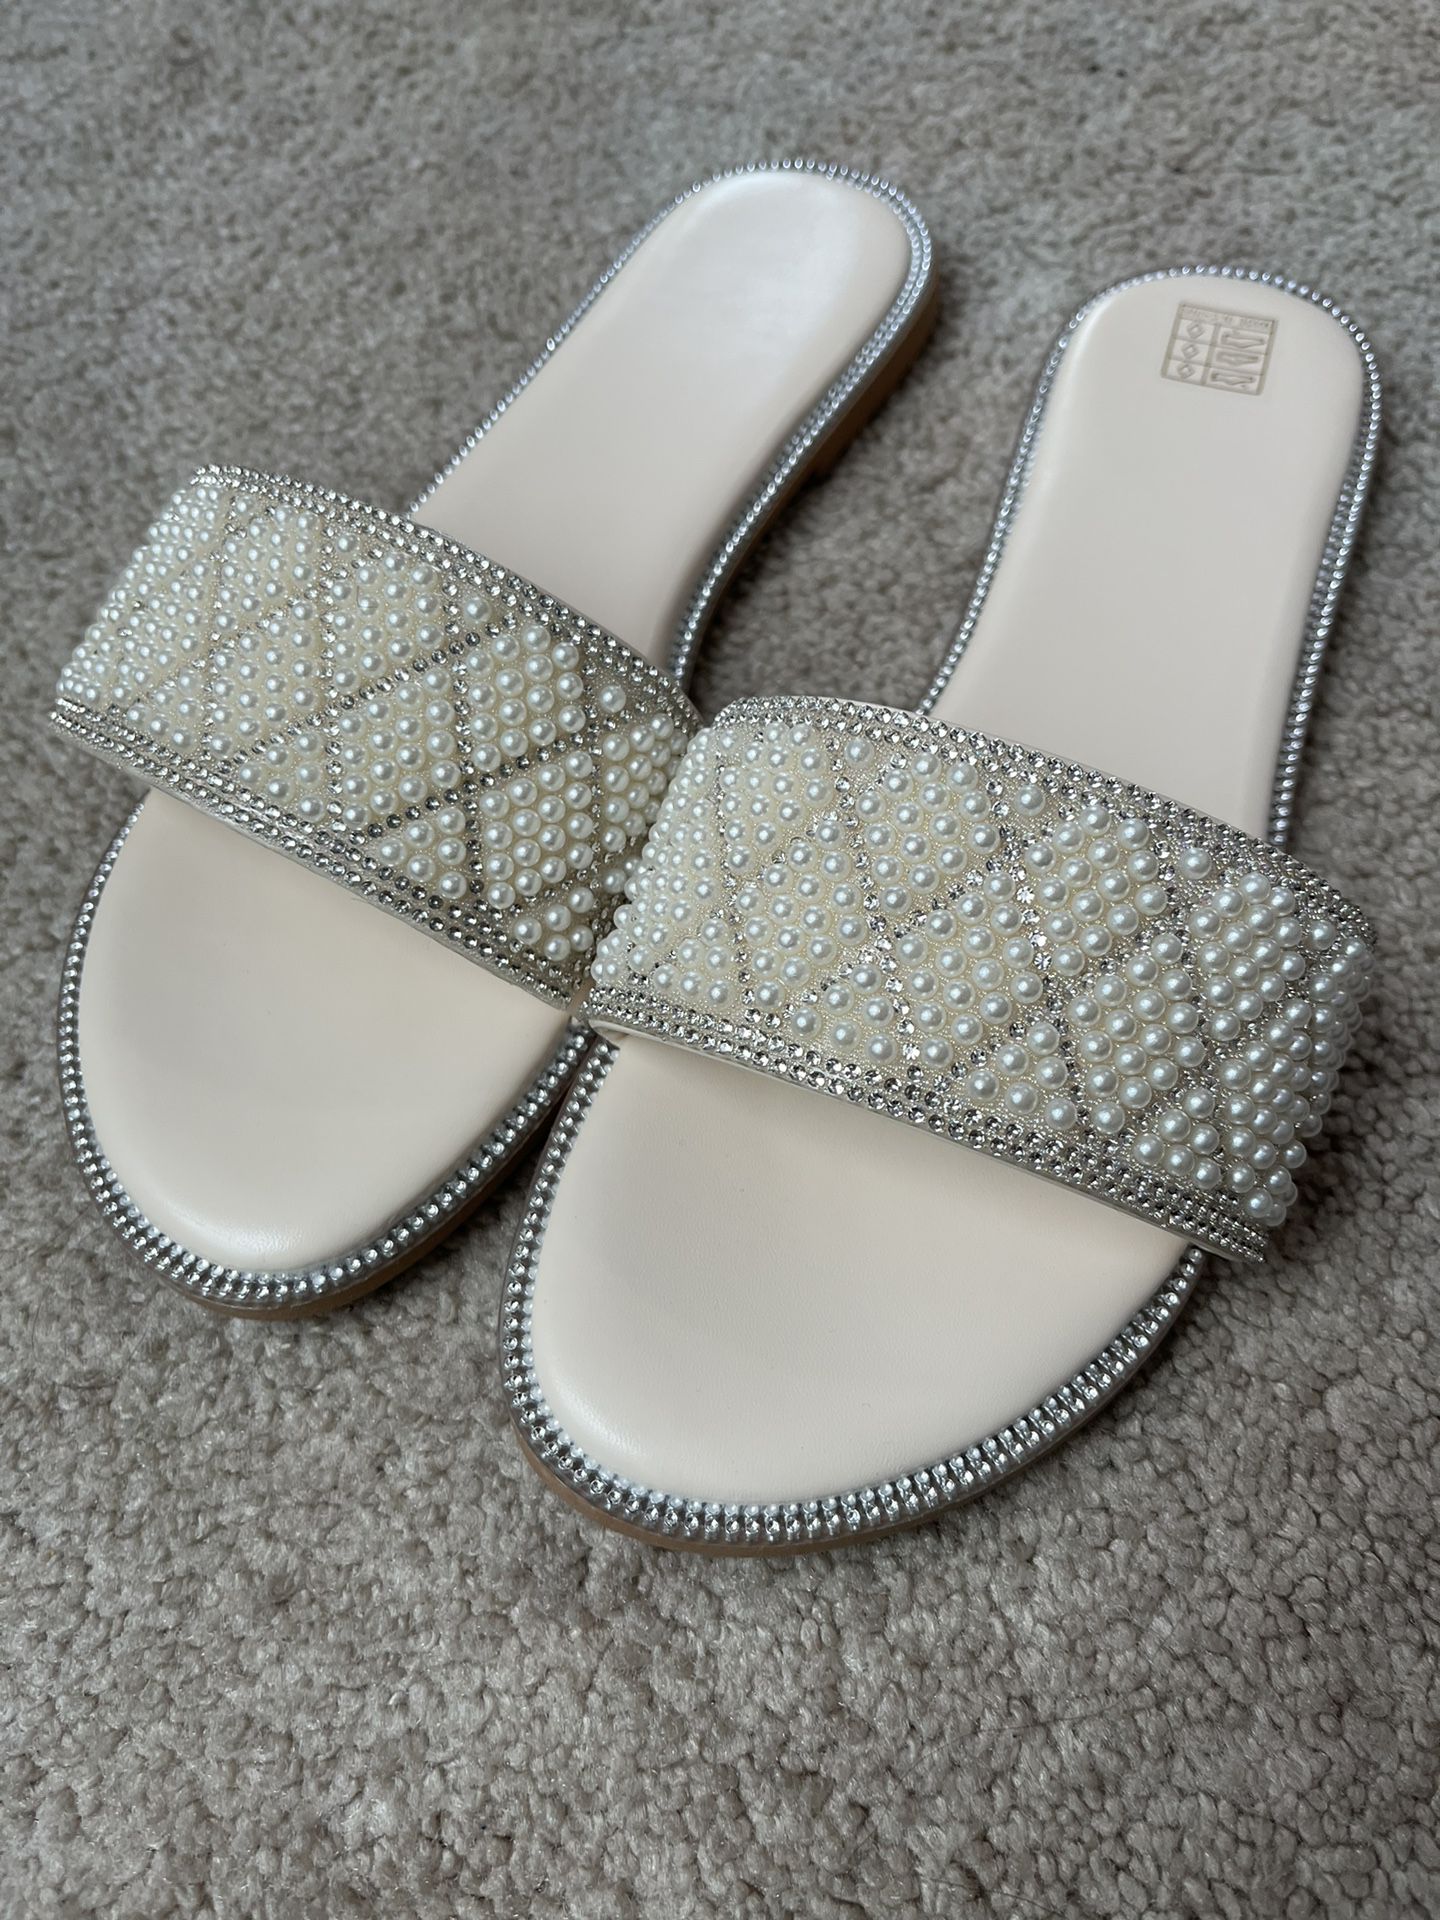 Pearl Women’s Sandals Size 8.5